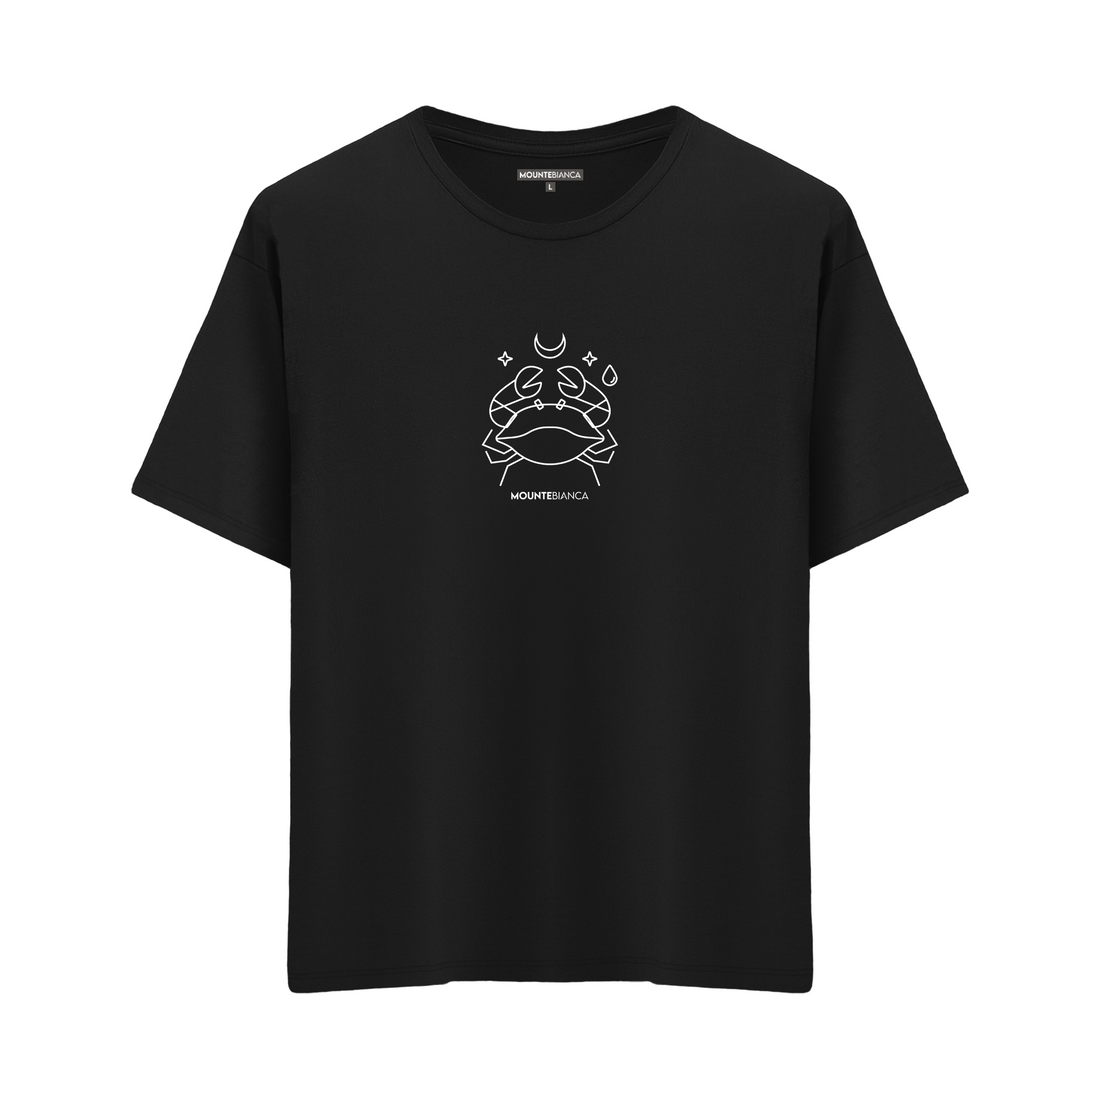 Yengeç - Oversize T-shirt